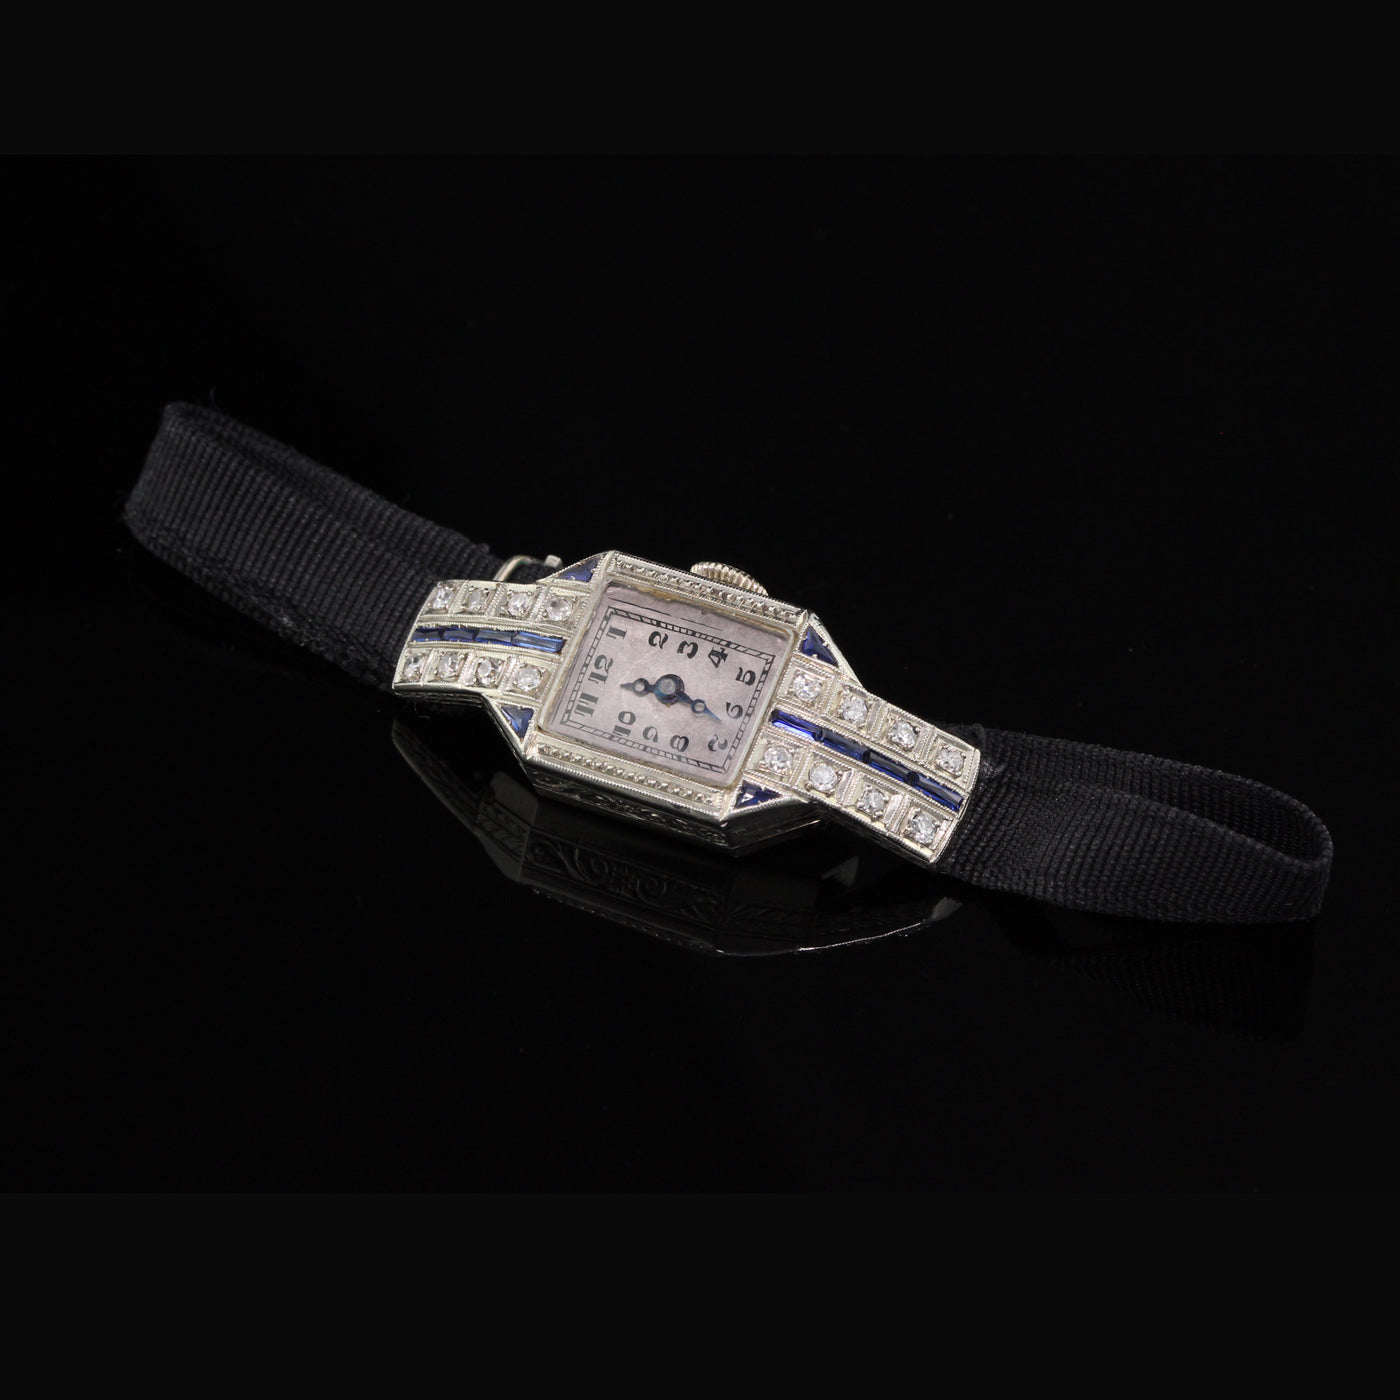 Antique Art Deco 18K White Gold Sapphire & Diamond Evening Watch